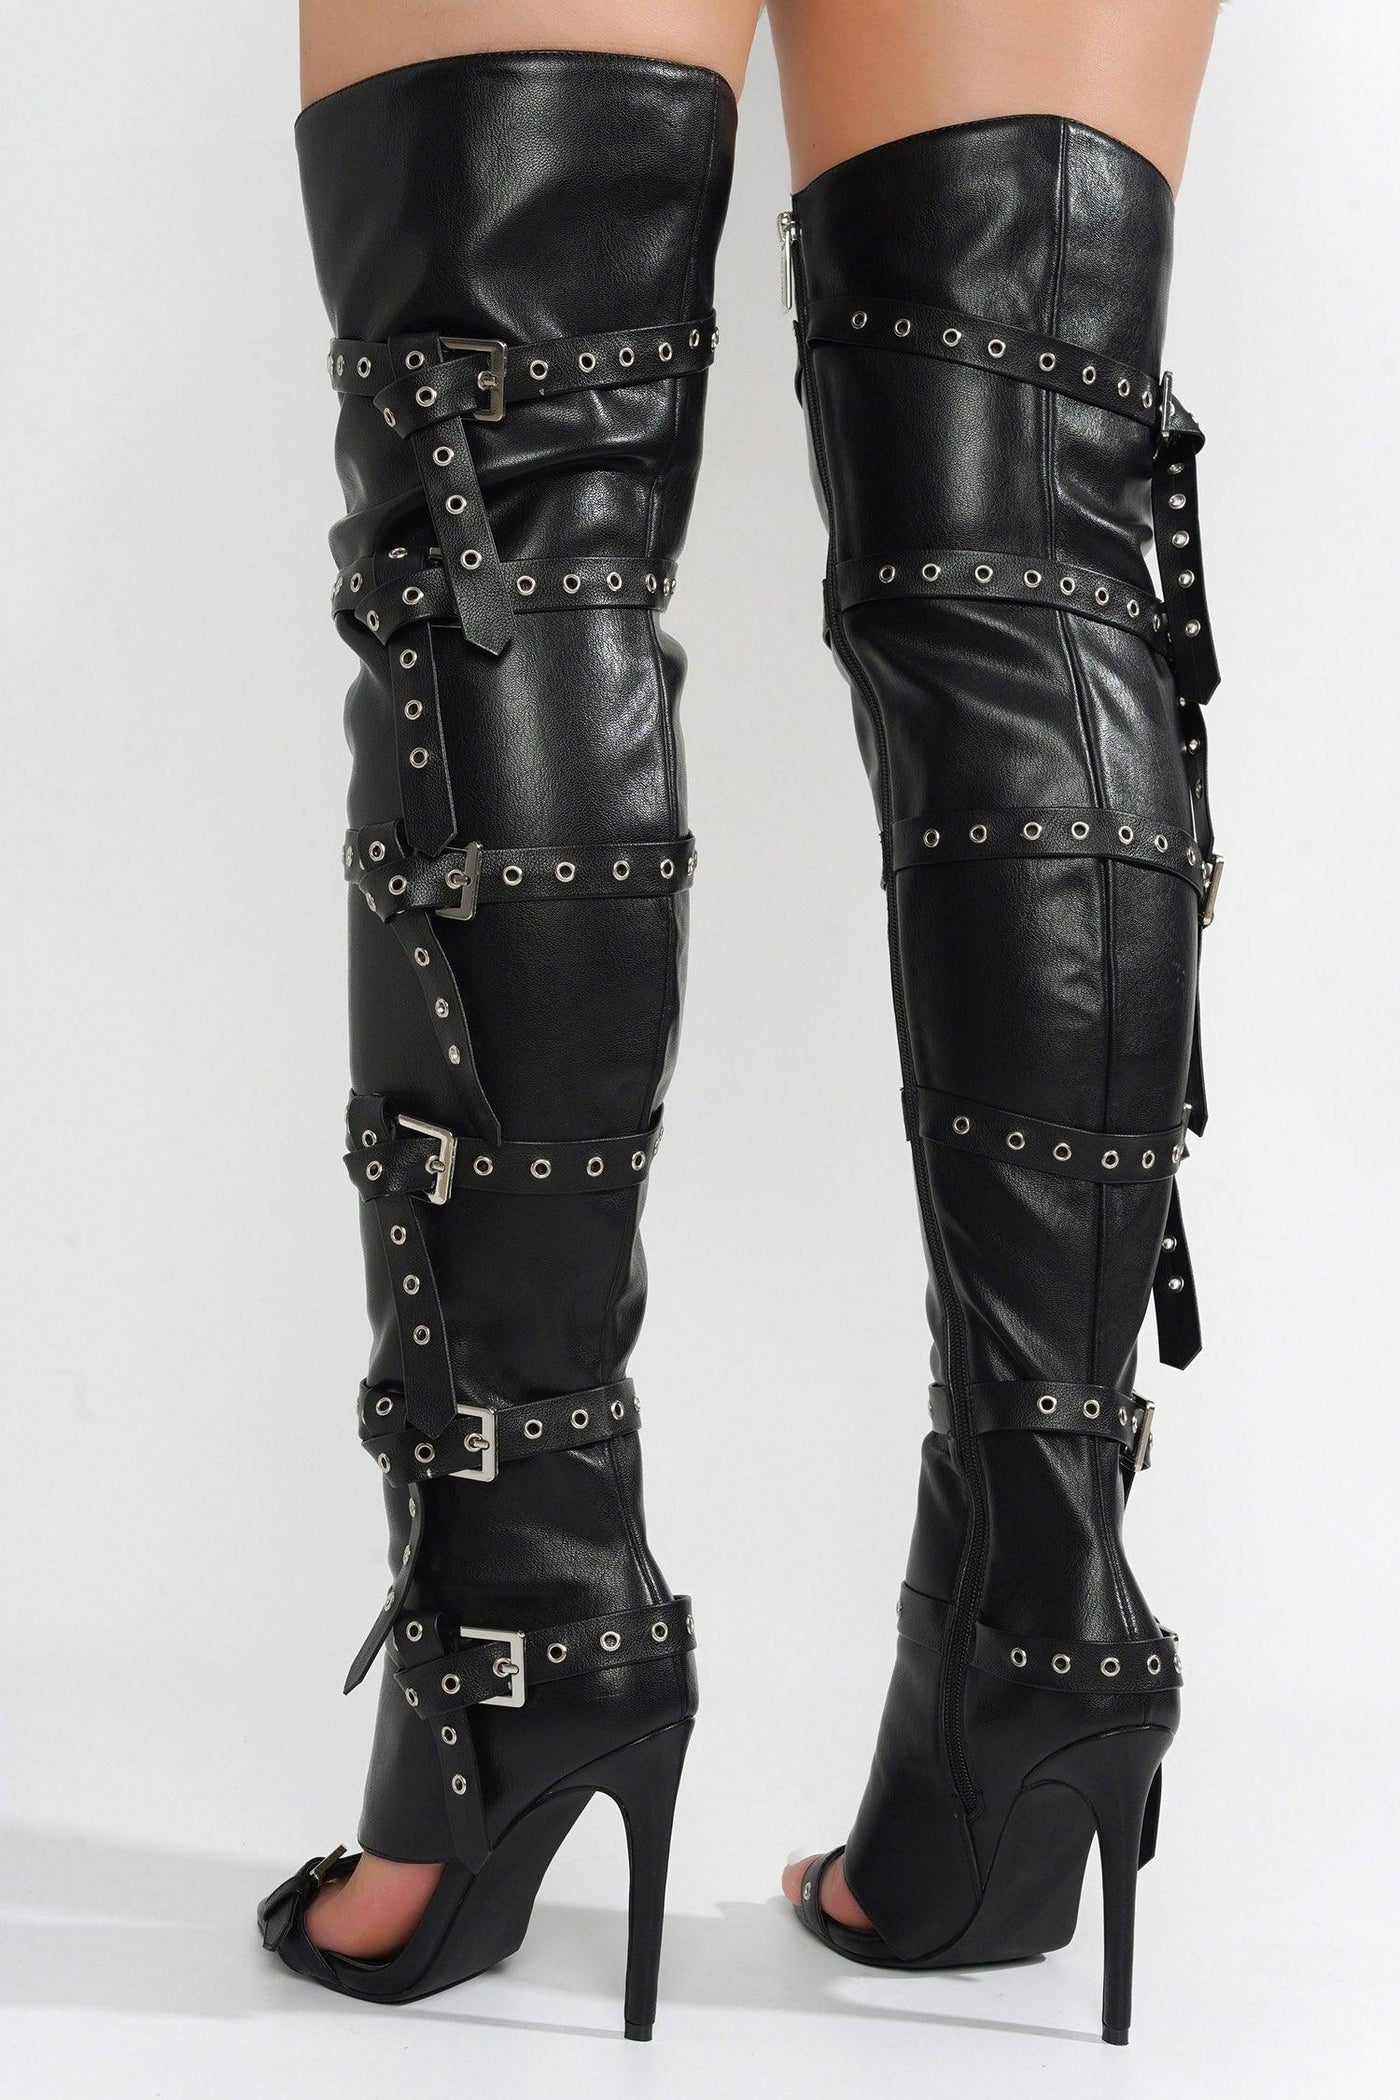 REVENA - BLACK Thigh High Boots